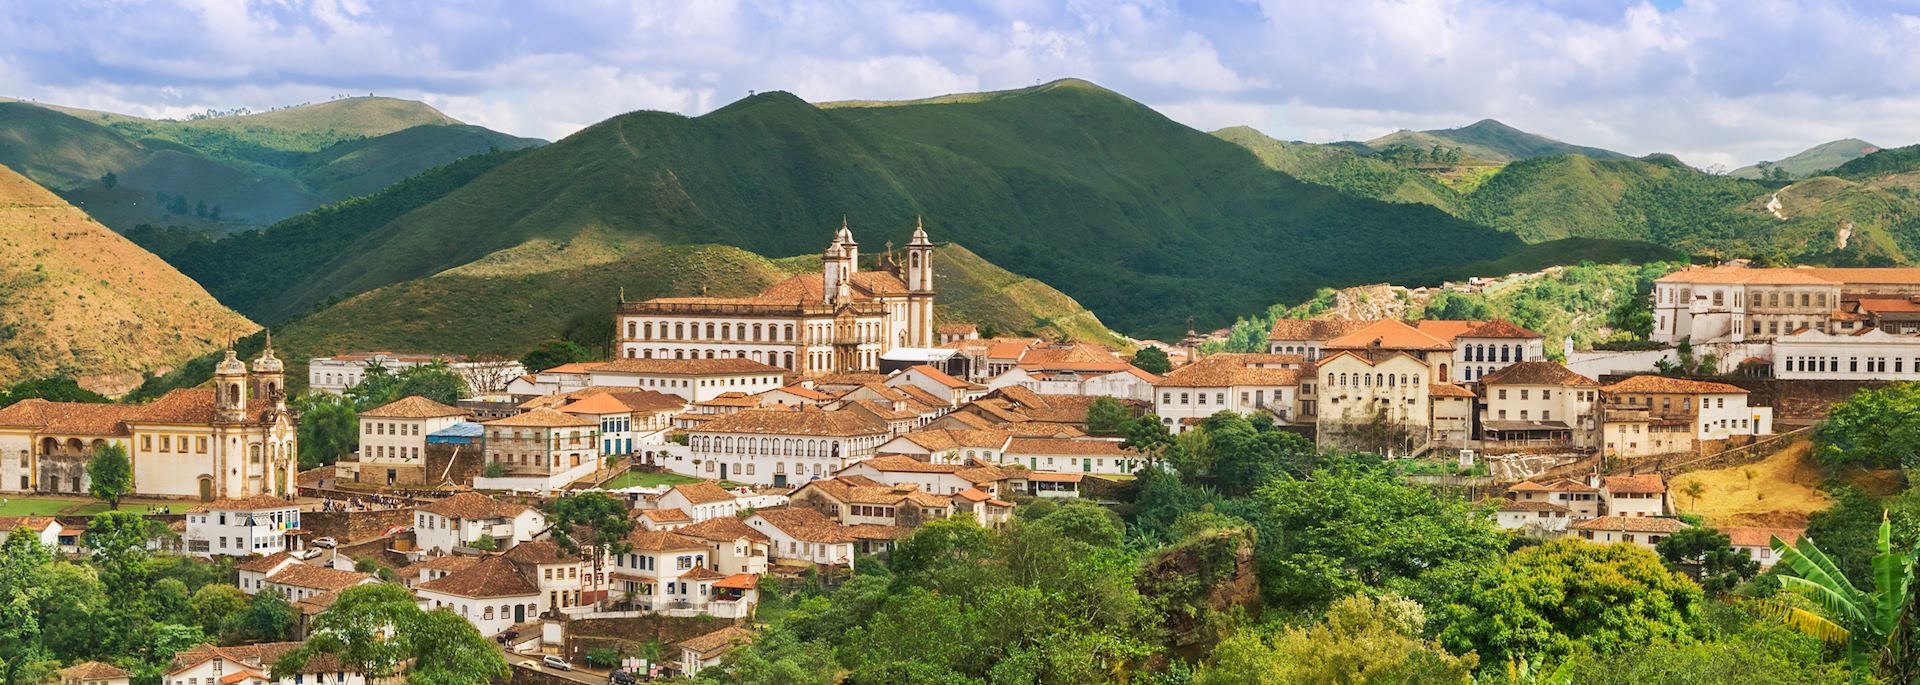 Ouro Preto in Minas Gerais